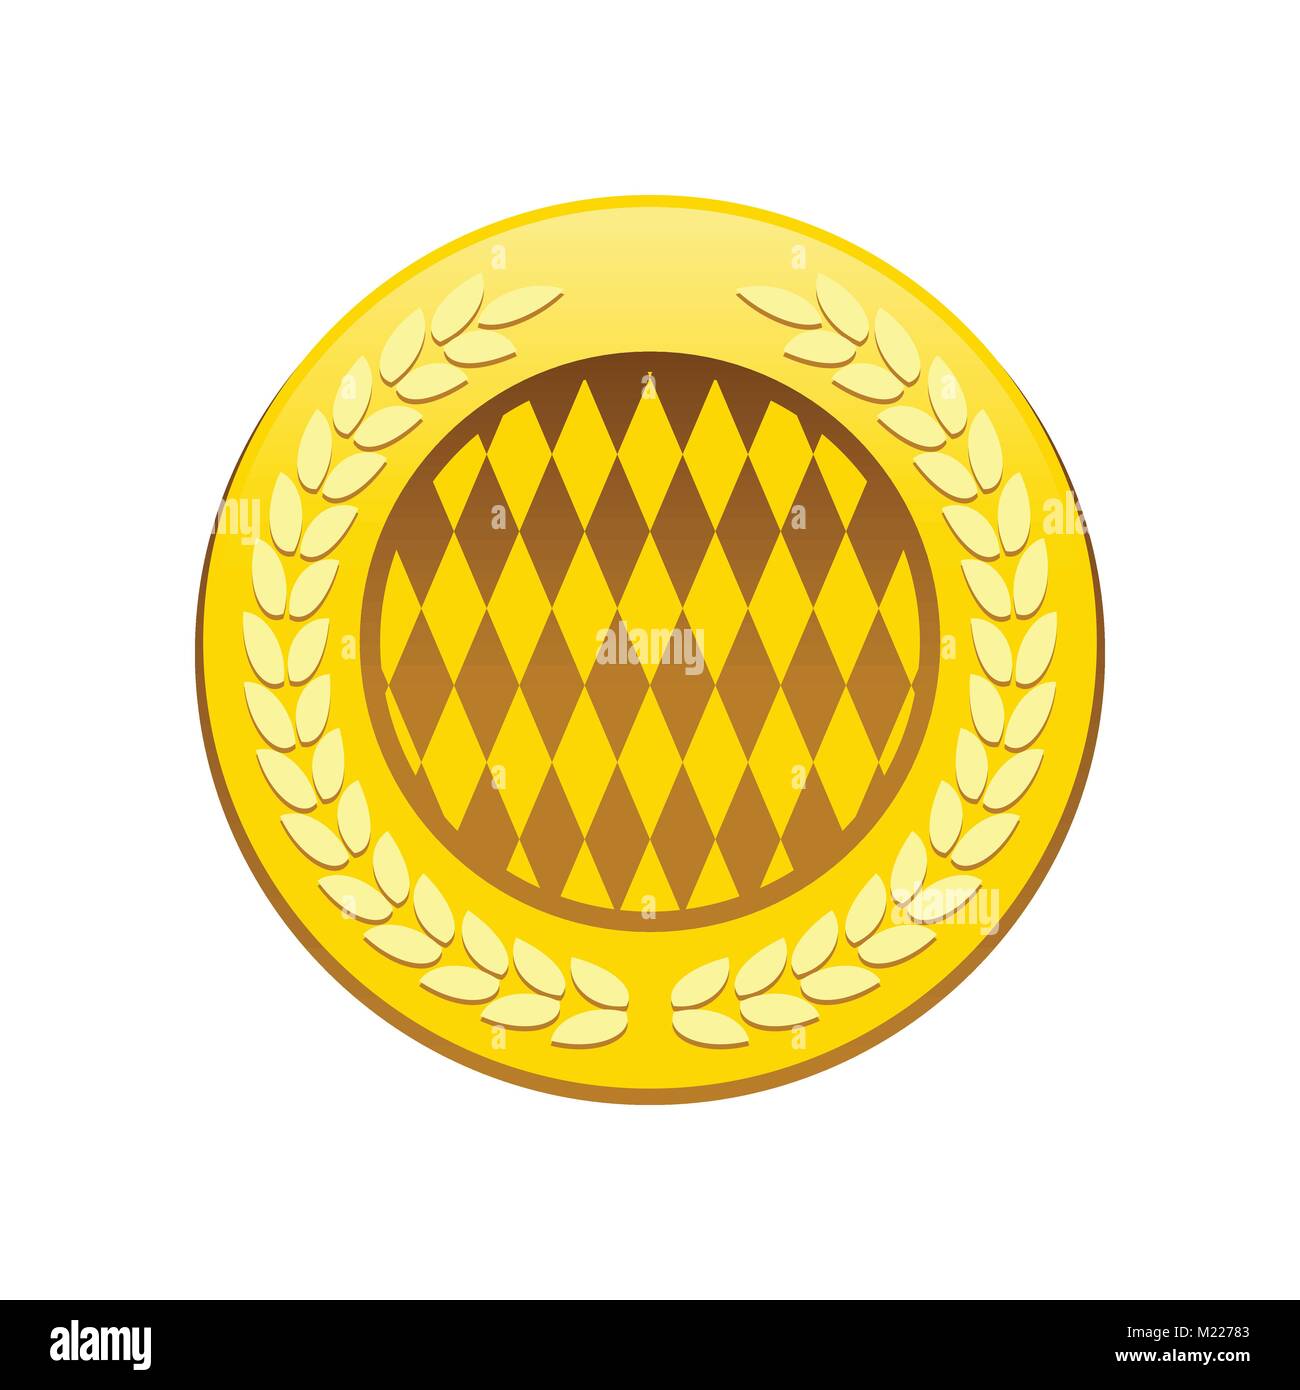 Prime d'or symbole insigne circulaire Vector Graphic Design Logo Illustration de Vecteur